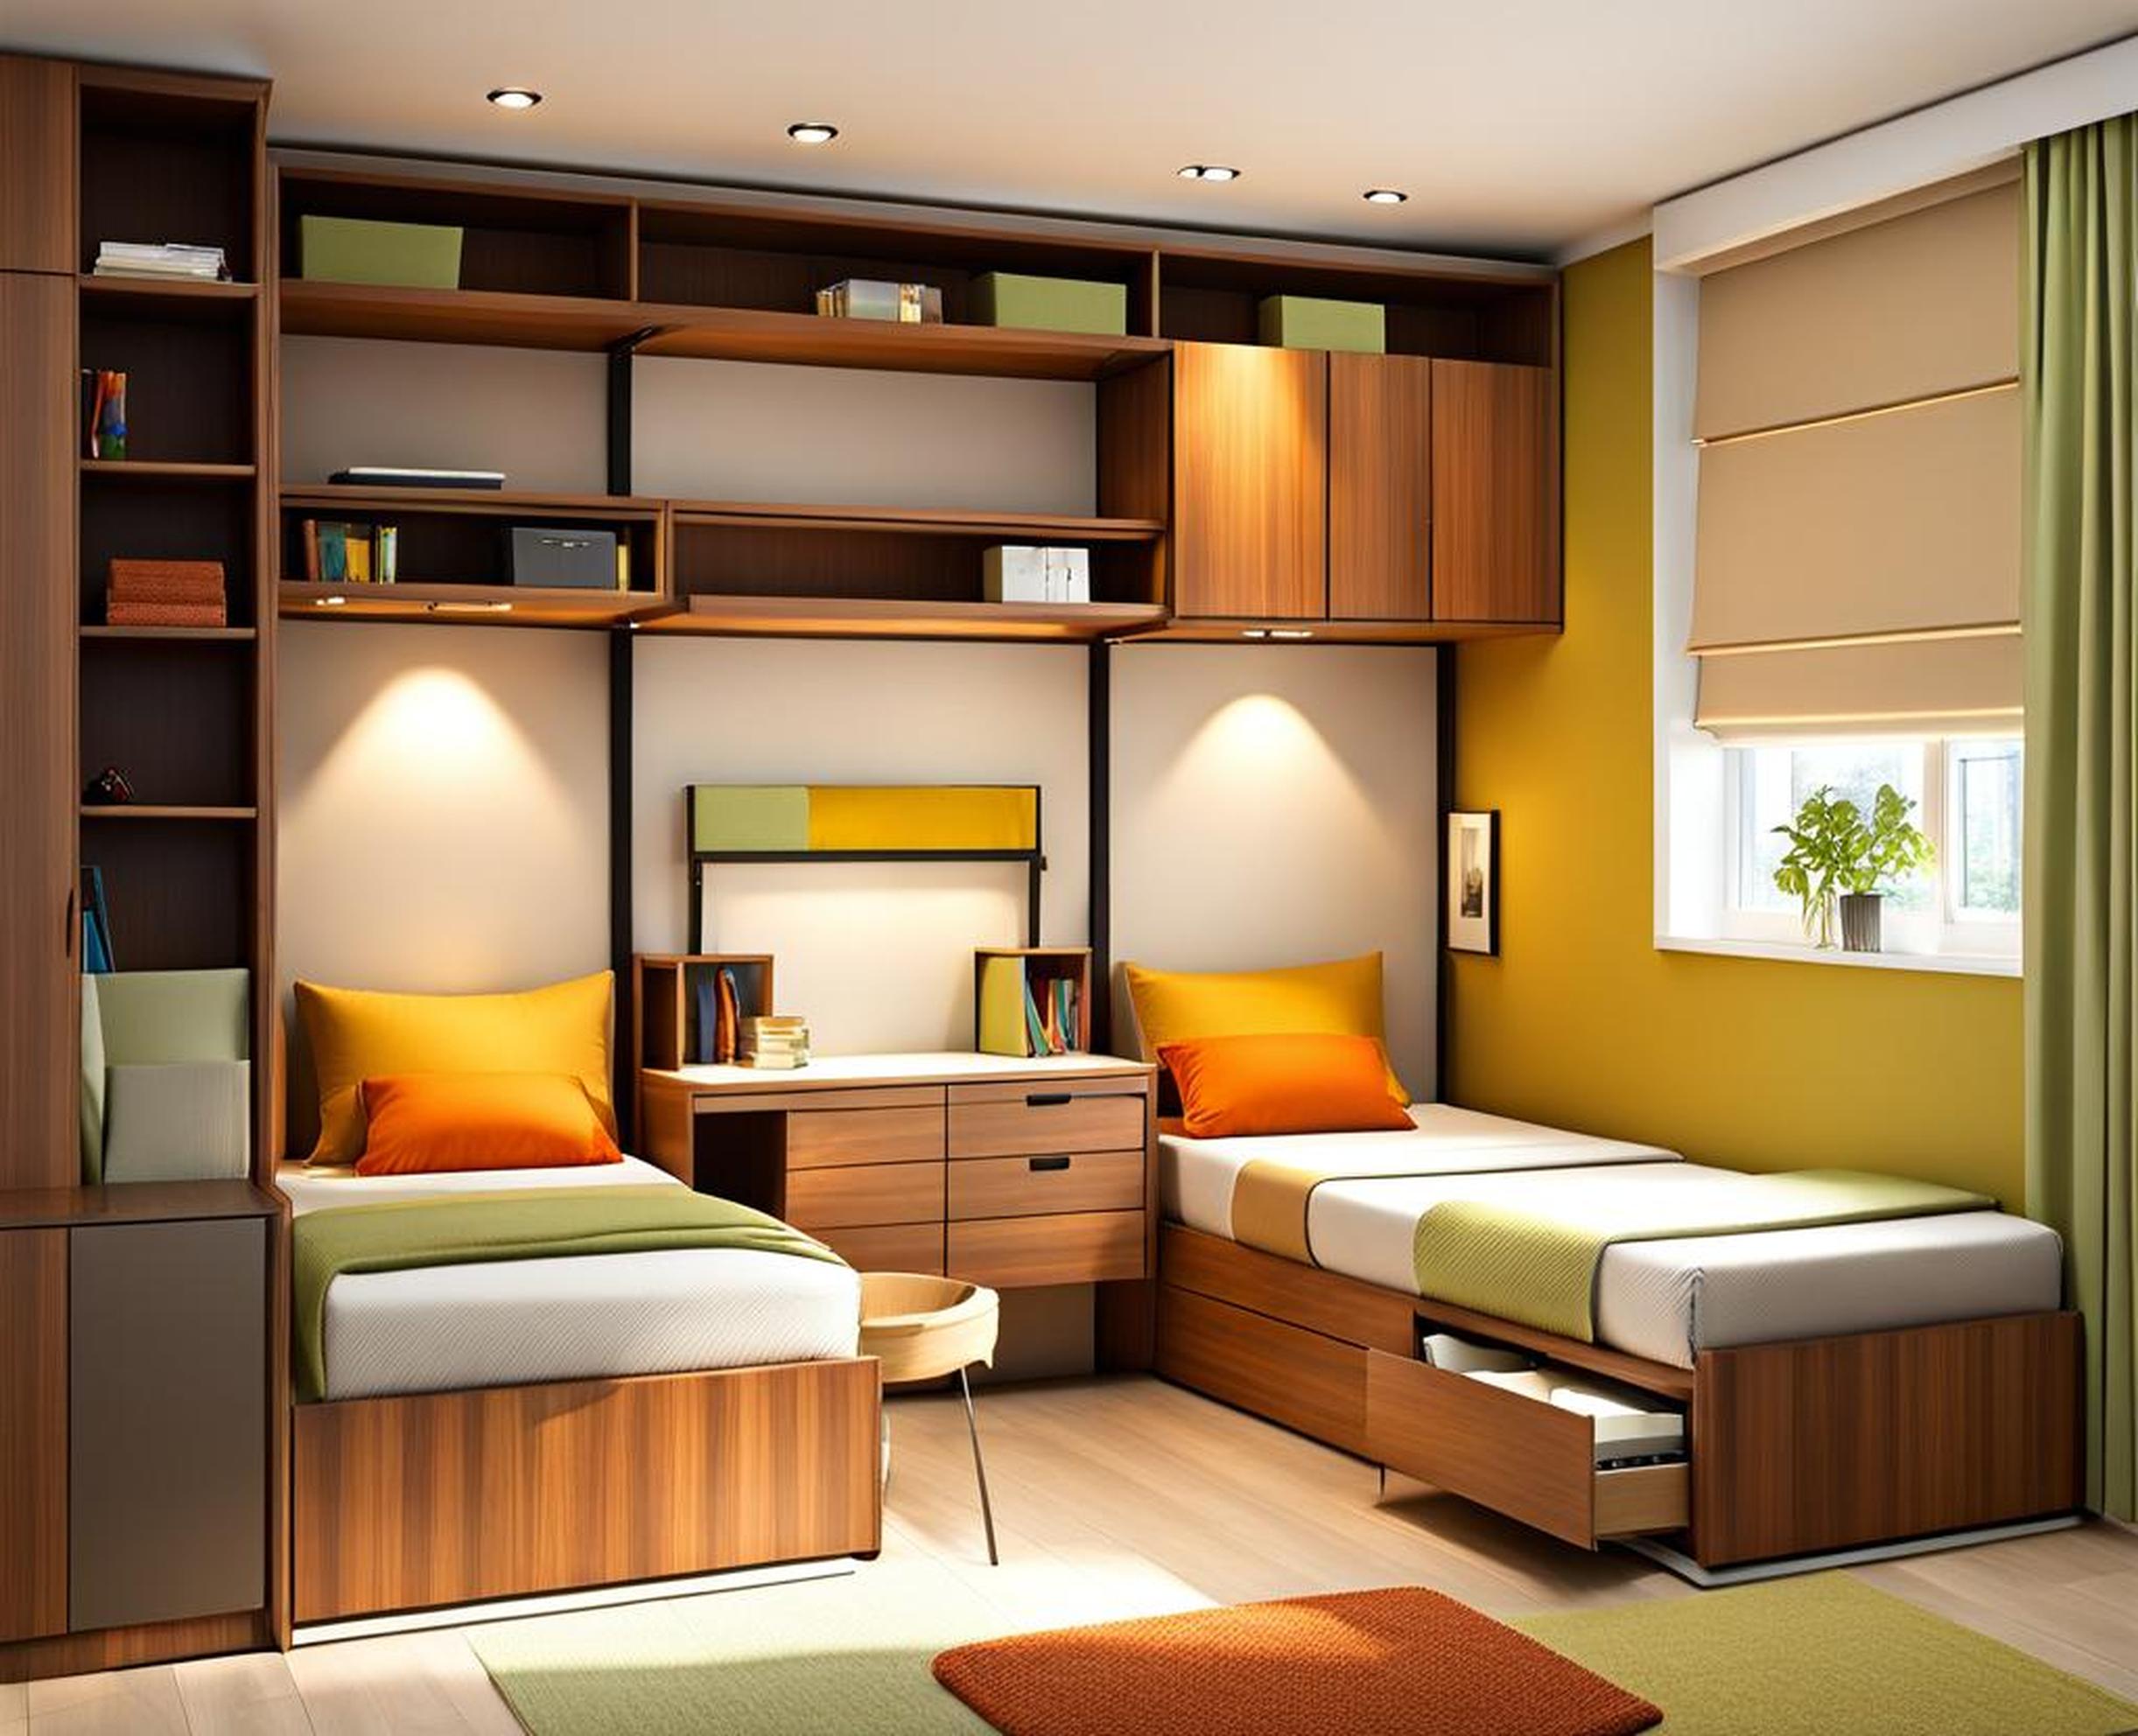 Versatile Twin Bed Storage for Maximum Bedroom Space